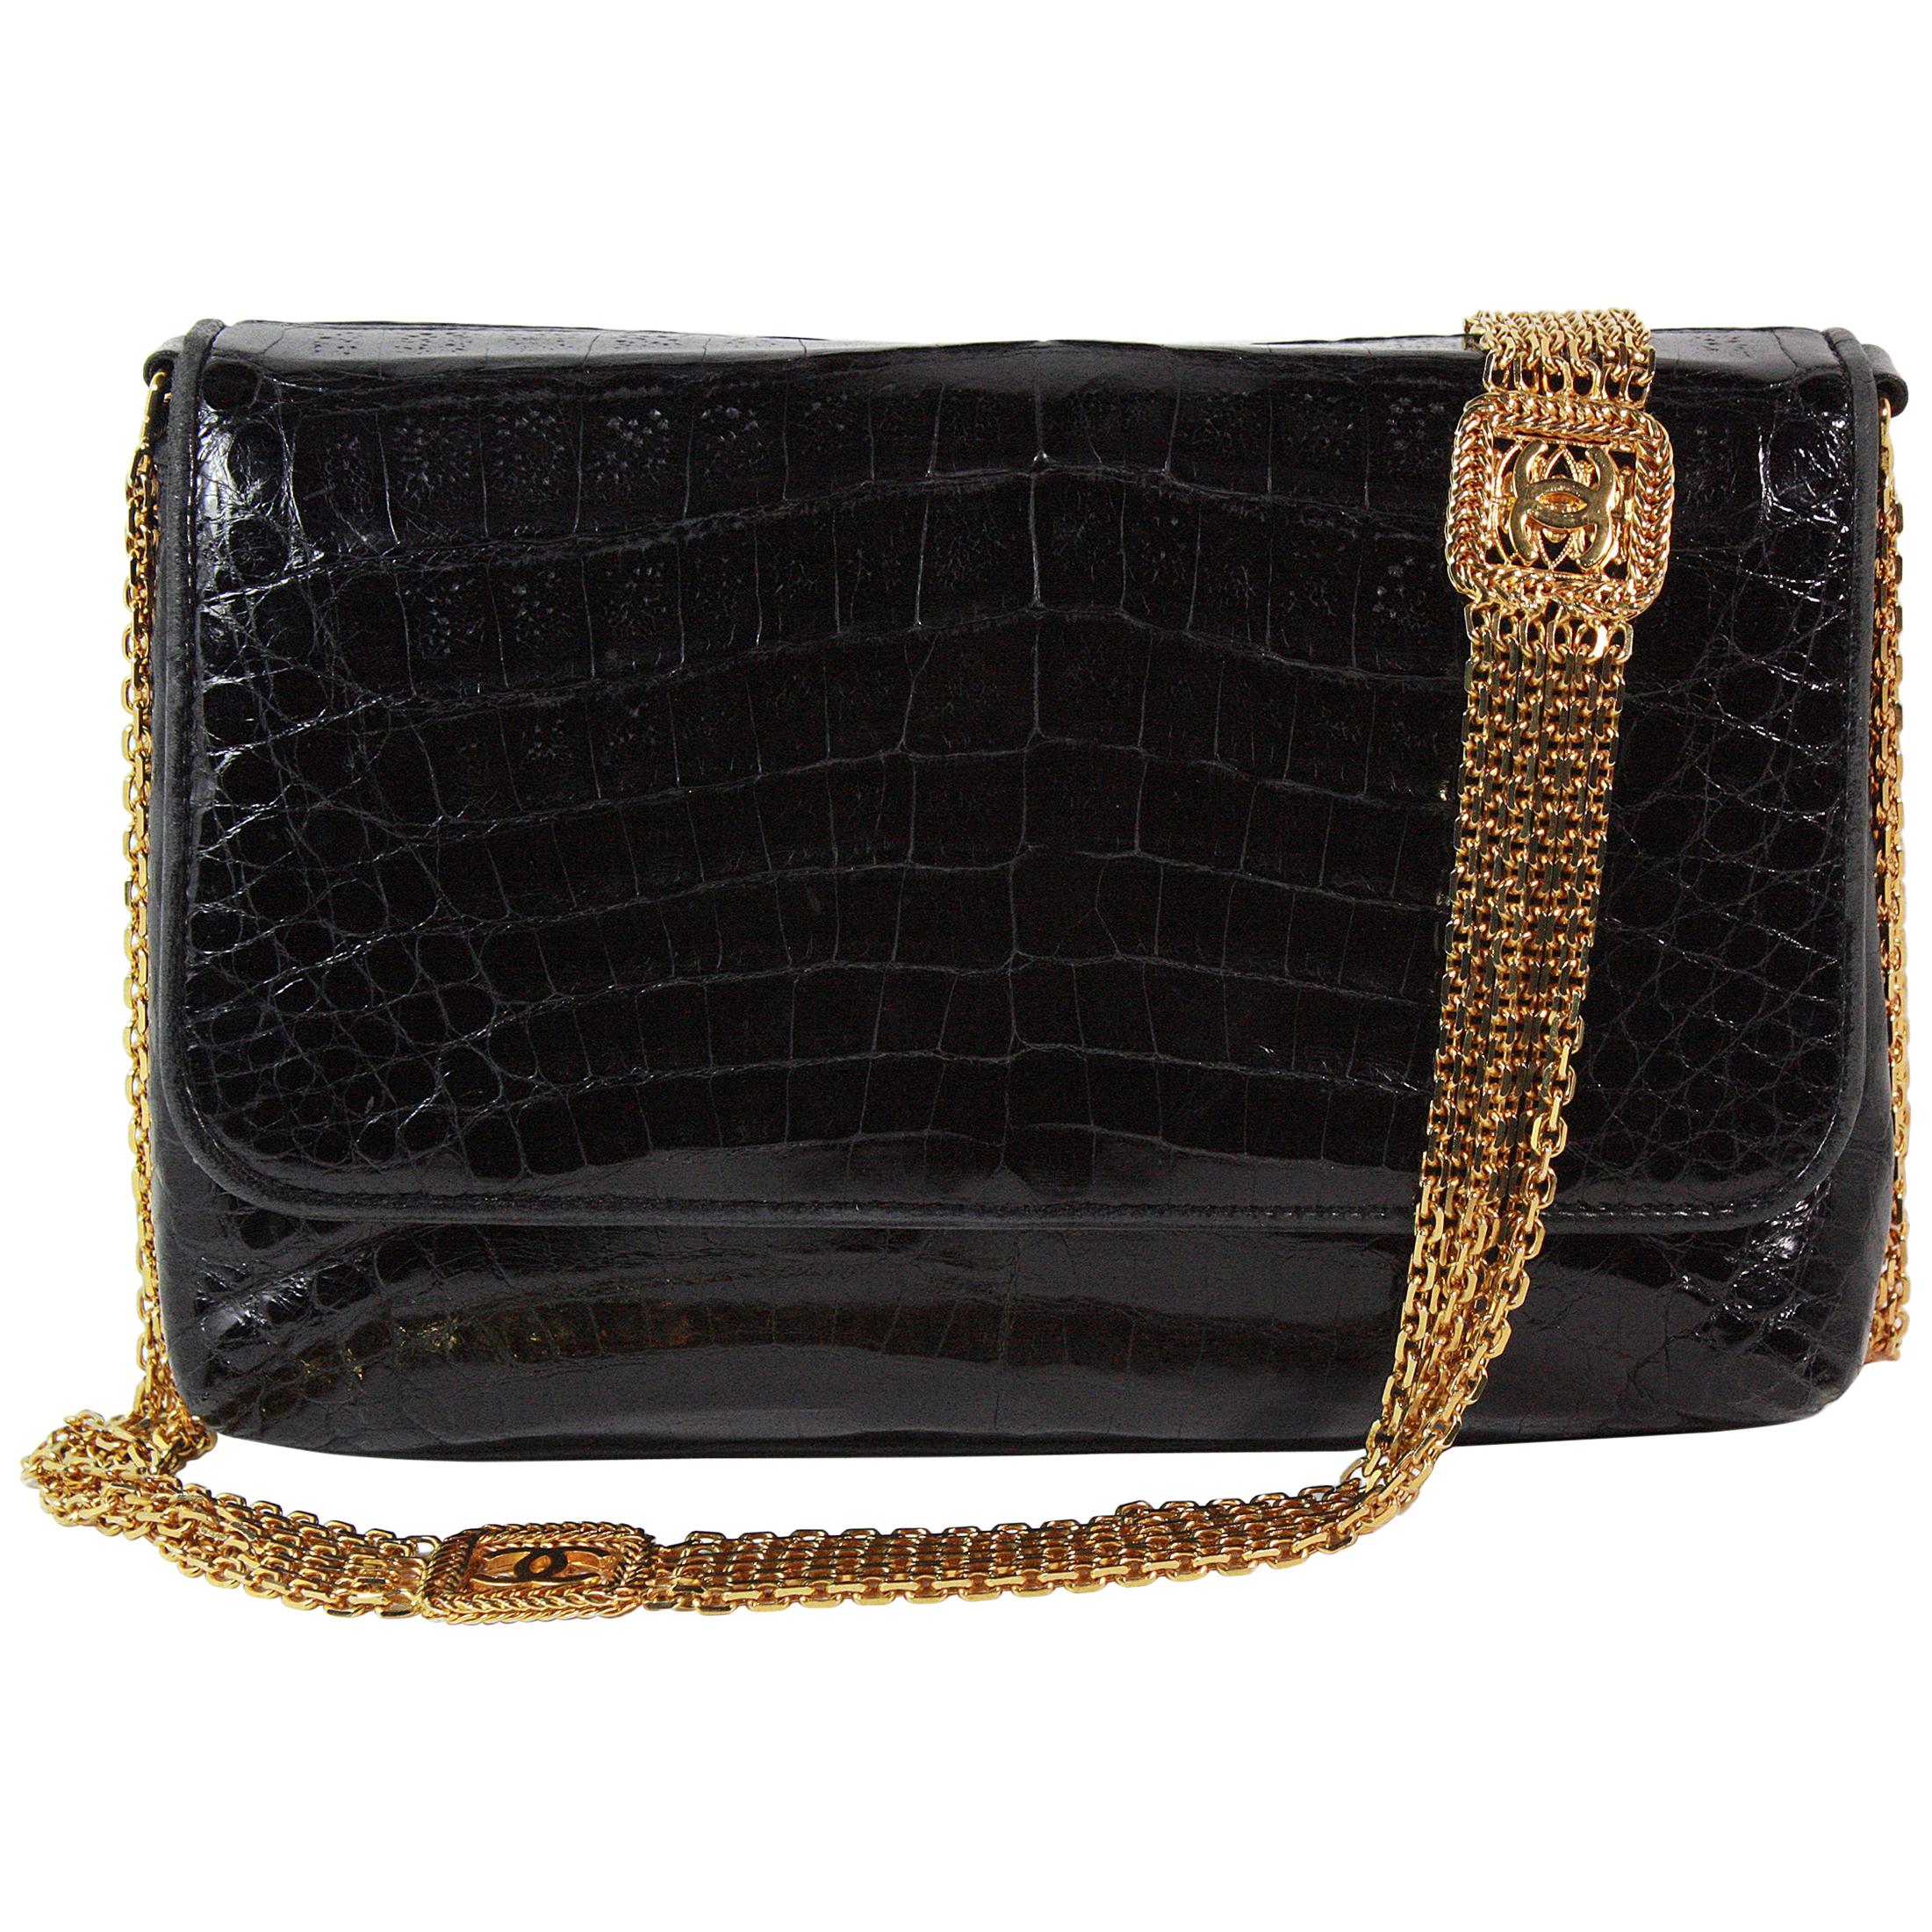 Chanel Black Crocodile Shoulder Bag with Gold Multi-Strand Chain Strap